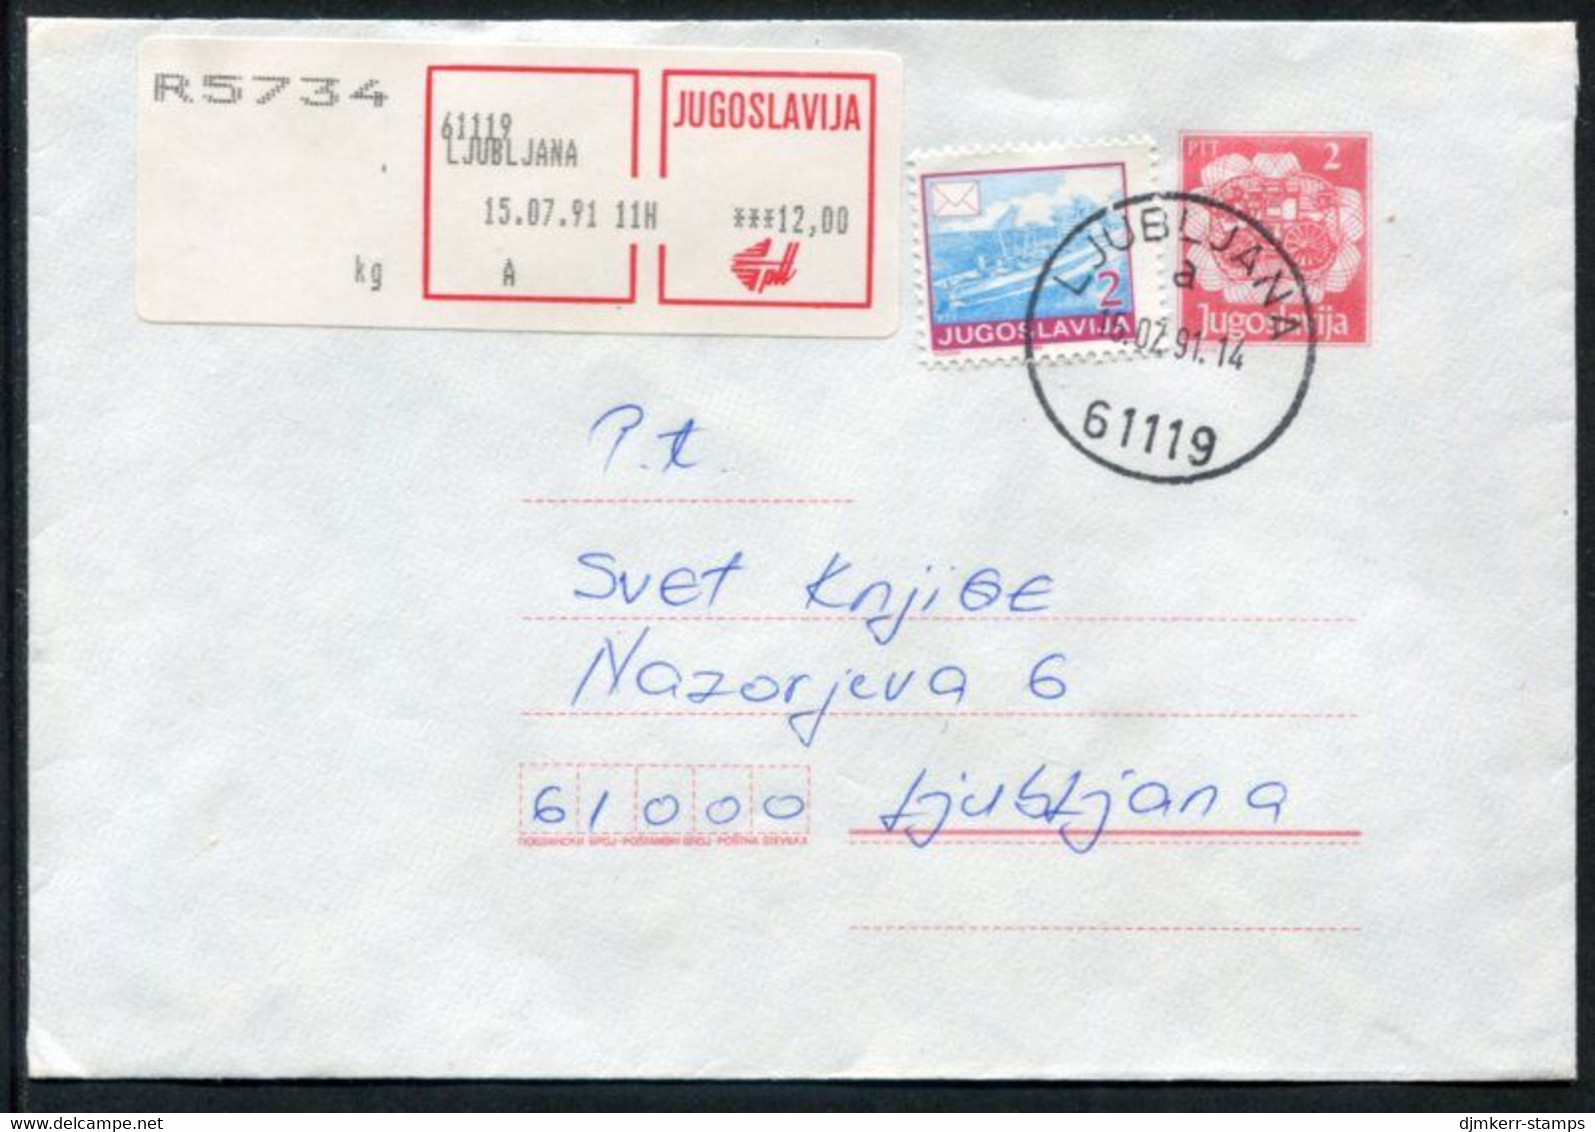 YUGOSLAVIA 1990 Mailcoach 2 D. Stationery Envelope Registered With Additional Franking.  Michel U96 - Postal Stationery